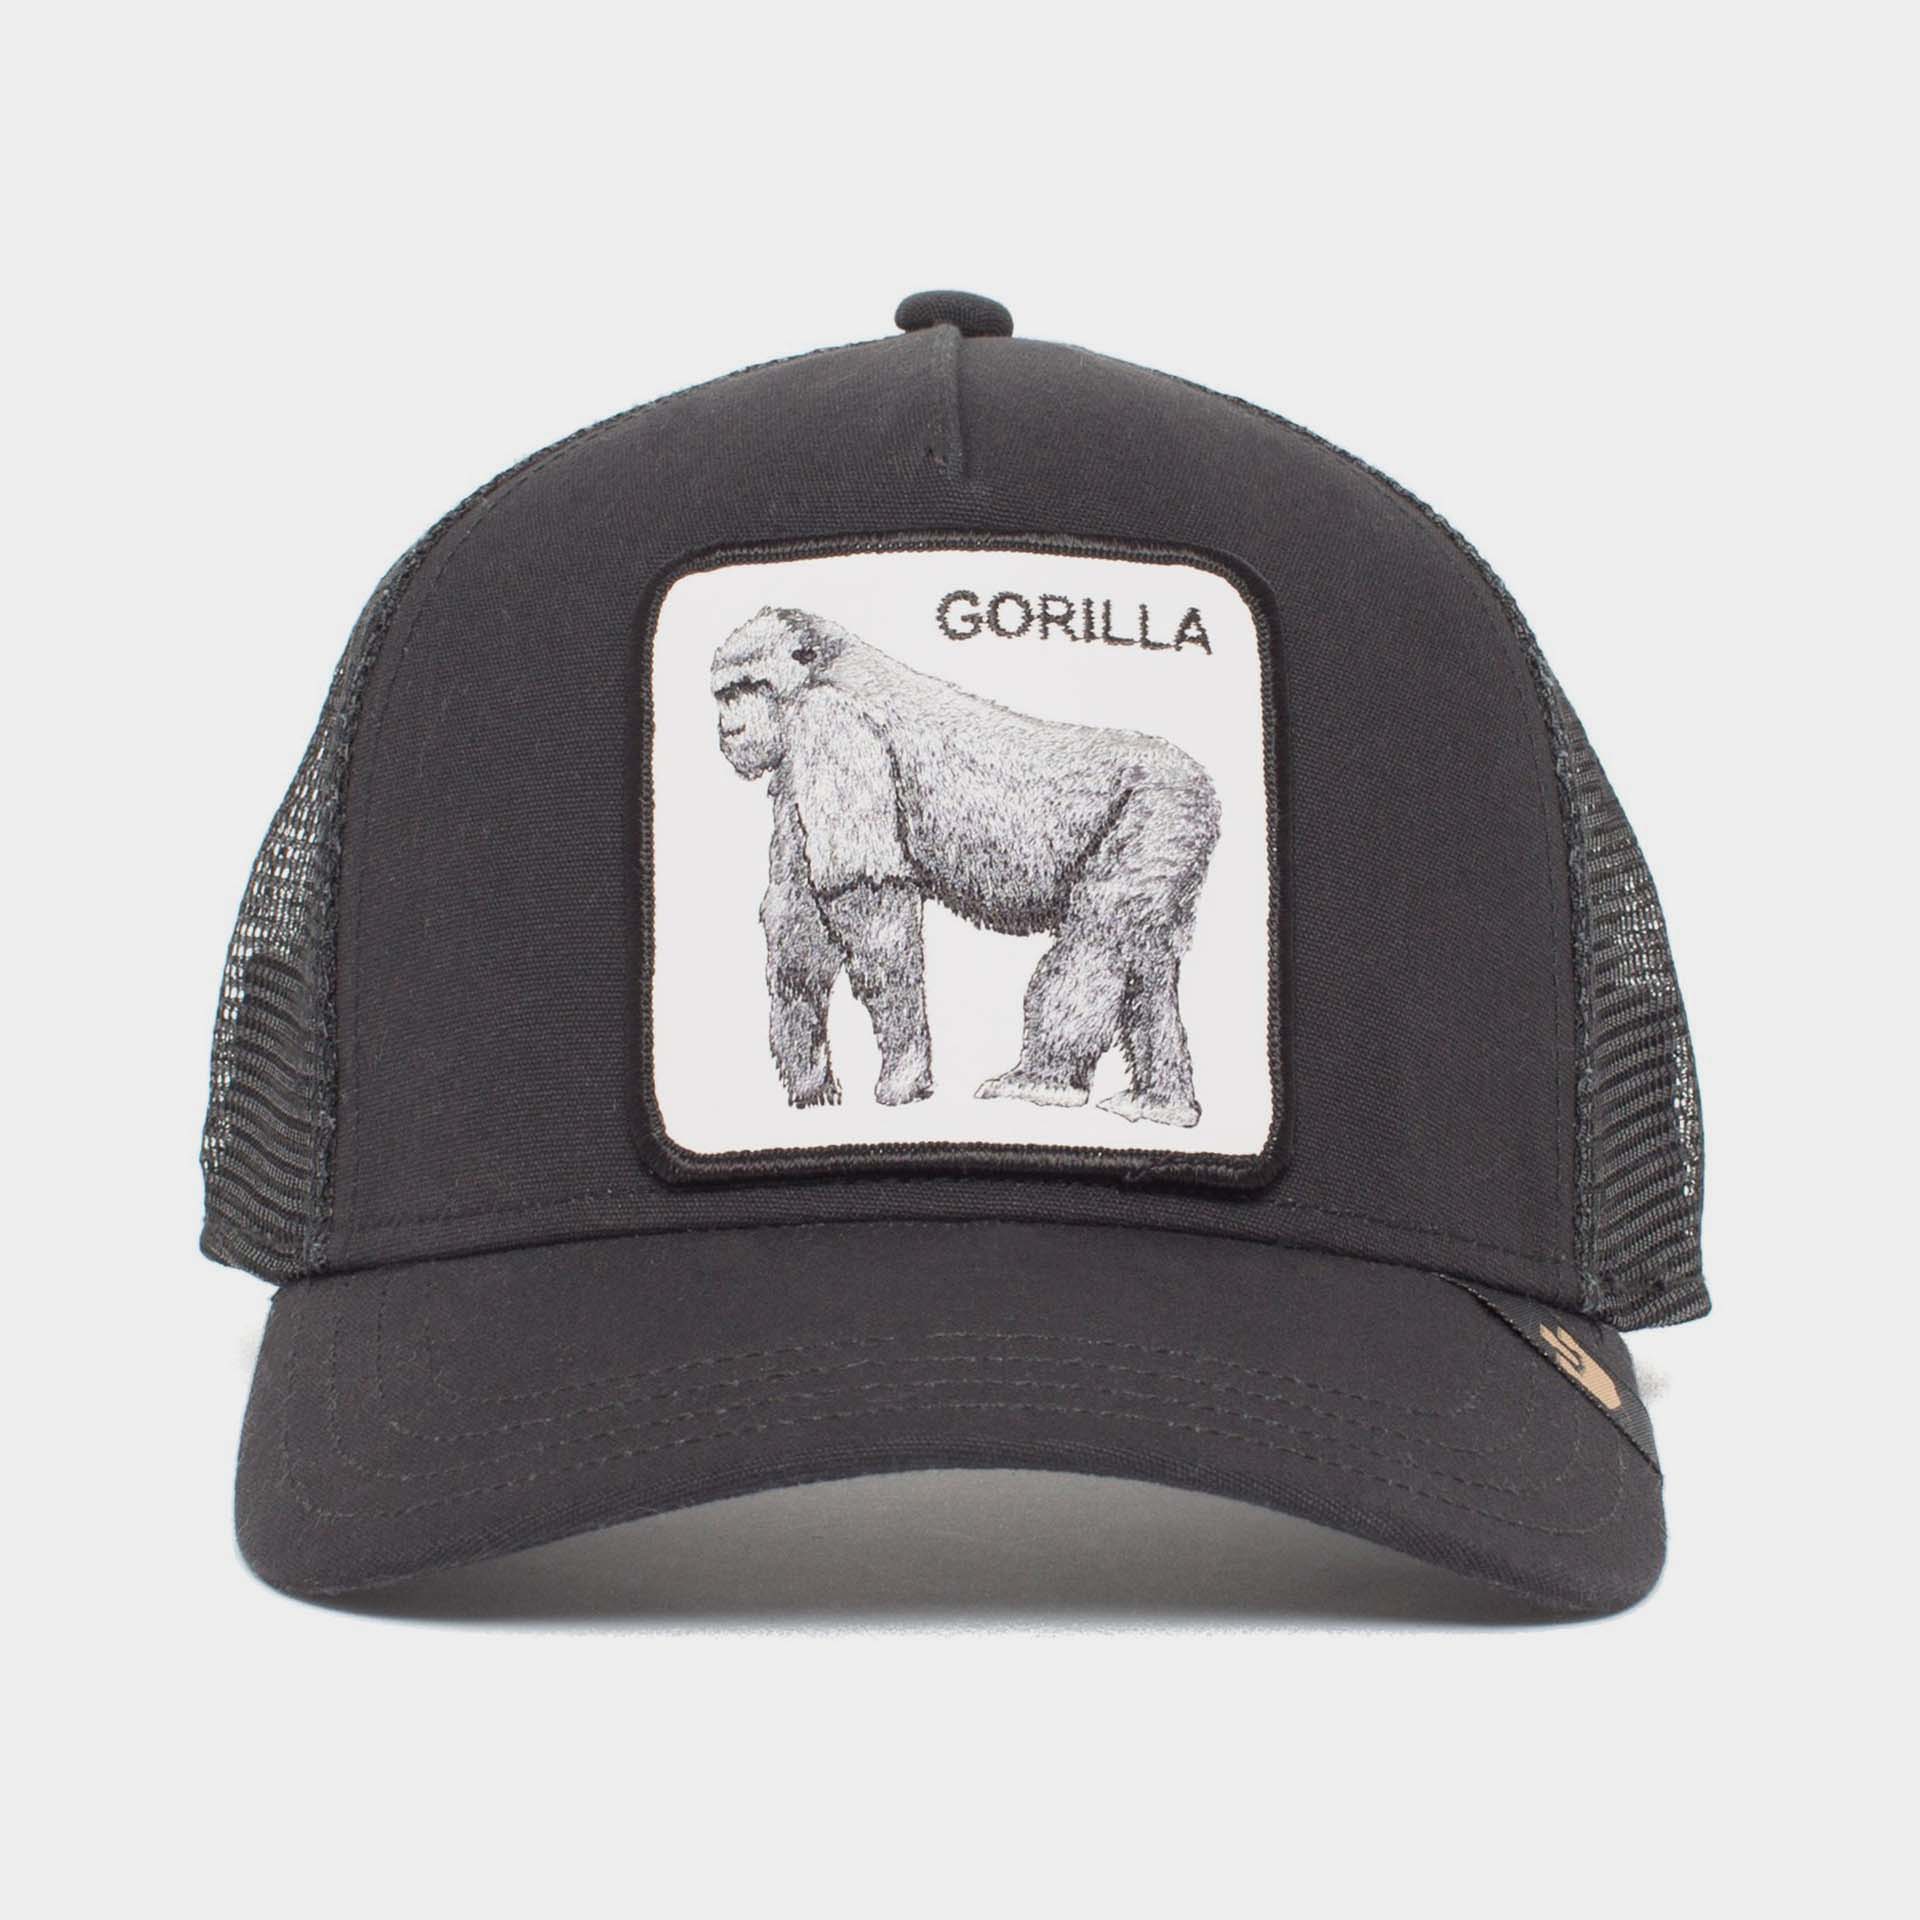 Goorin Bros The Gorilla Baseball Trucker Cap Black 